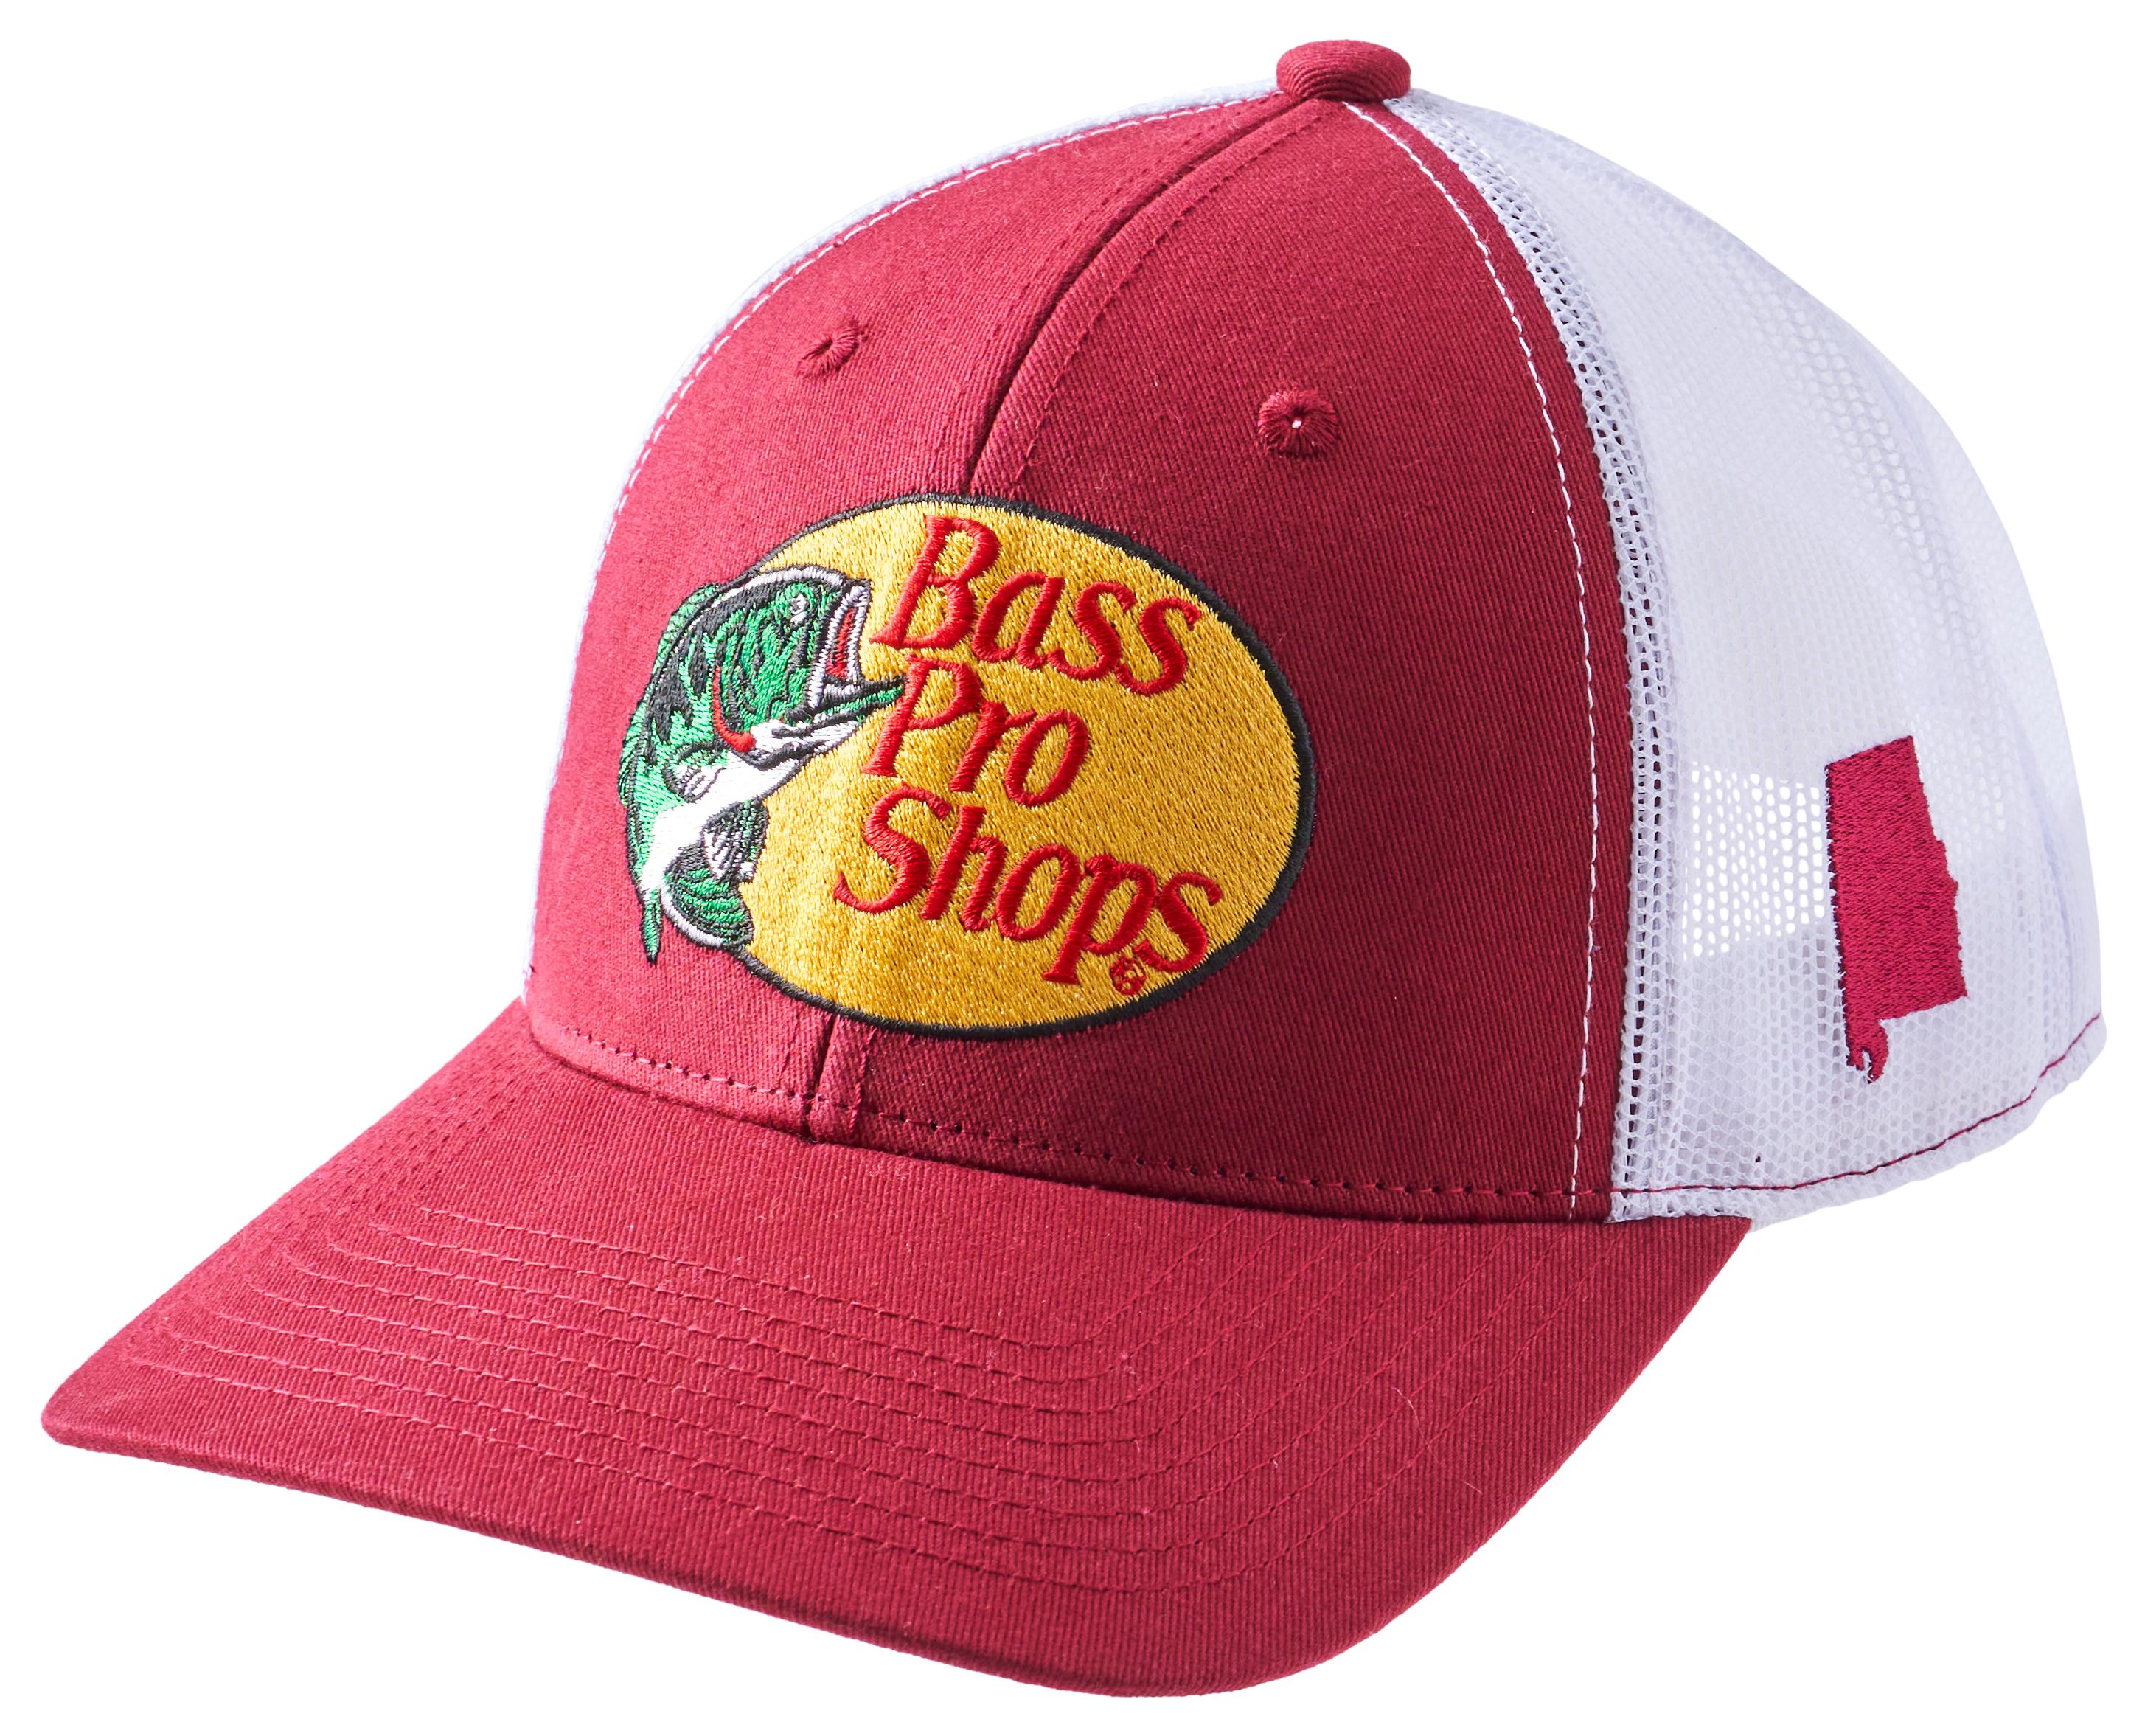 Bass Pro Shops Woodcut Logo and Alabama Patch Snapback Cap